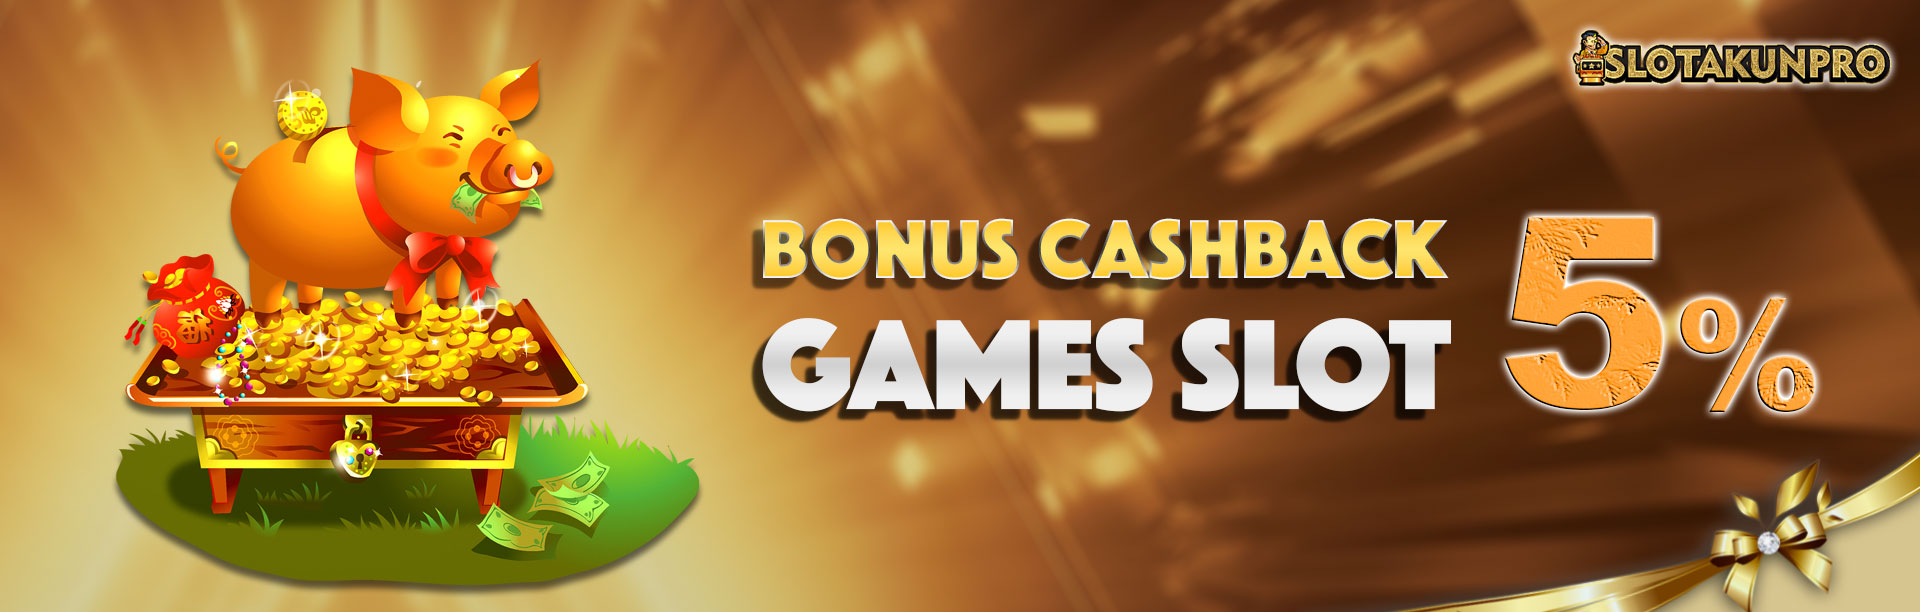 Bonus Cashback Slot 5%